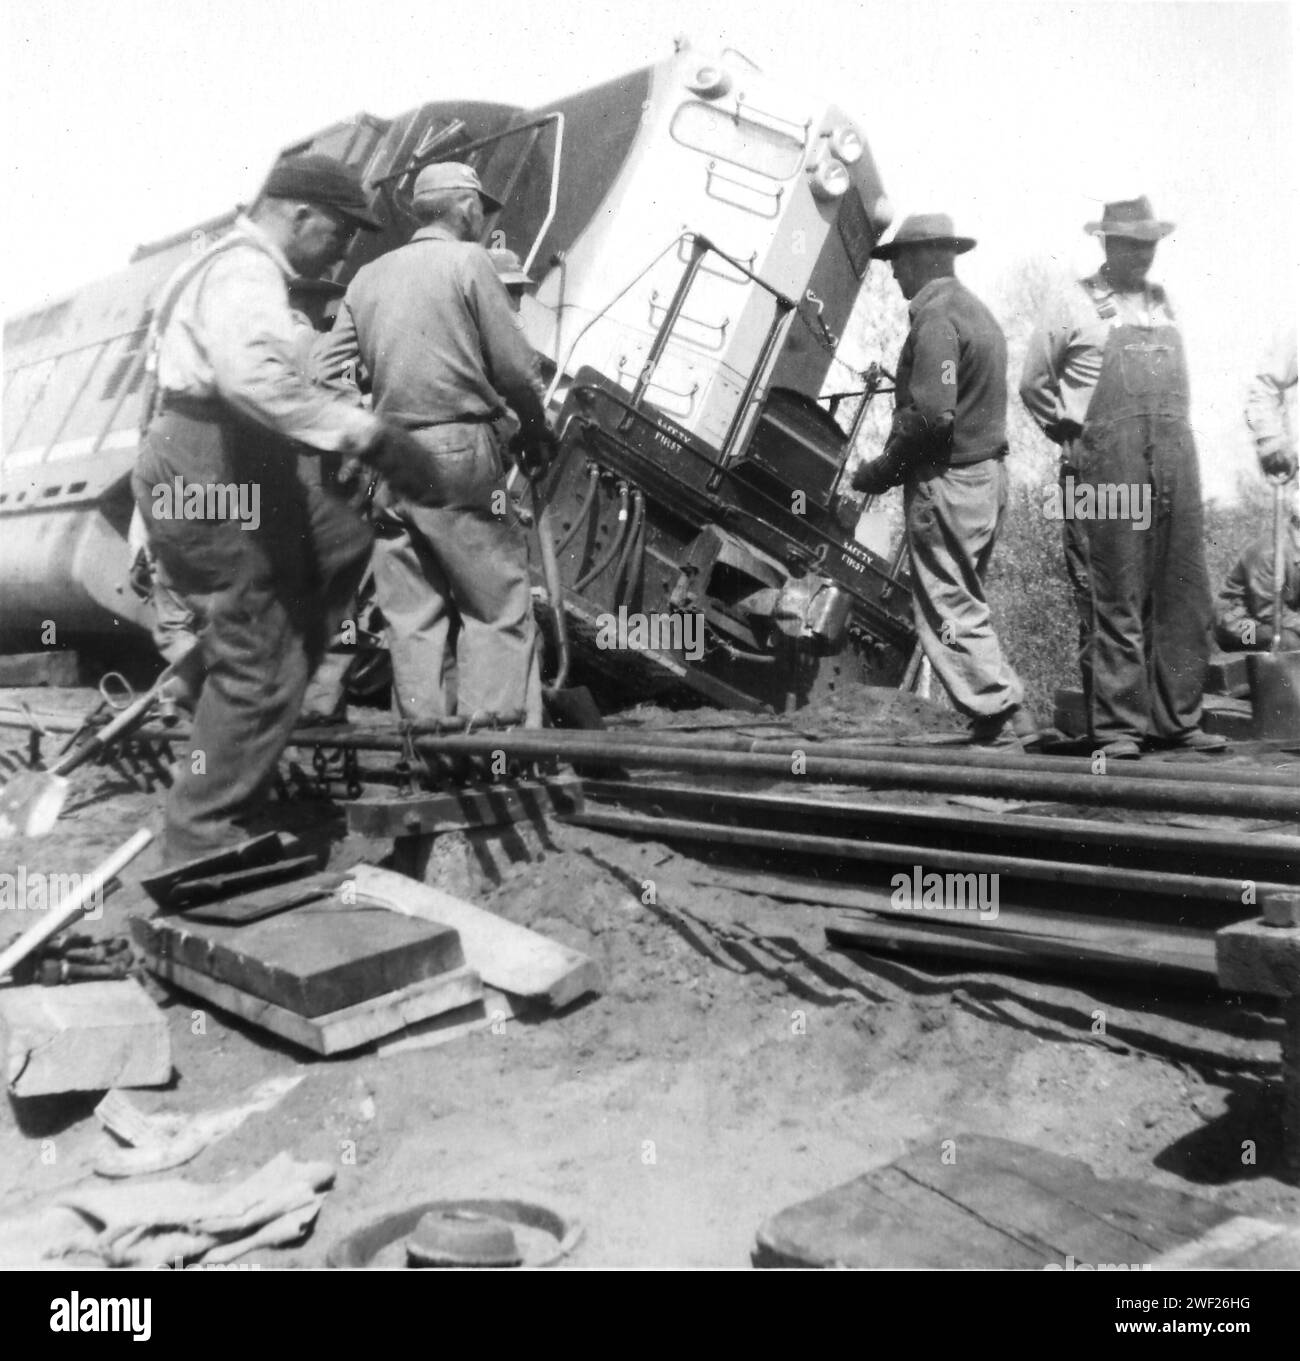 Repair workers gather around a derailed railroad train, ca. 1948. Stock Photo